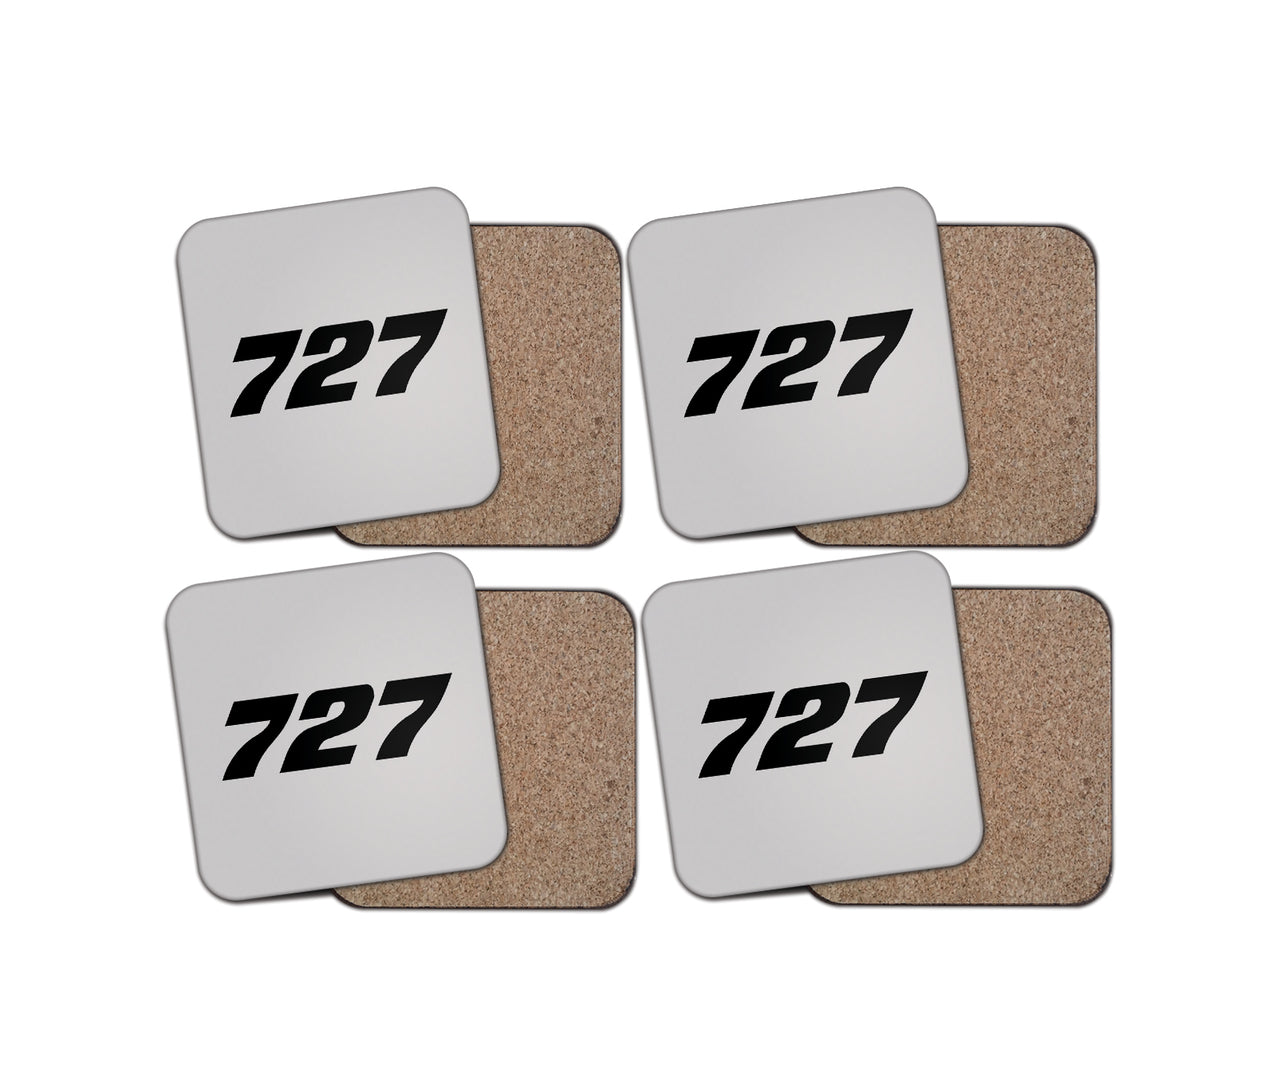 727 Flat Text Designed Coasters